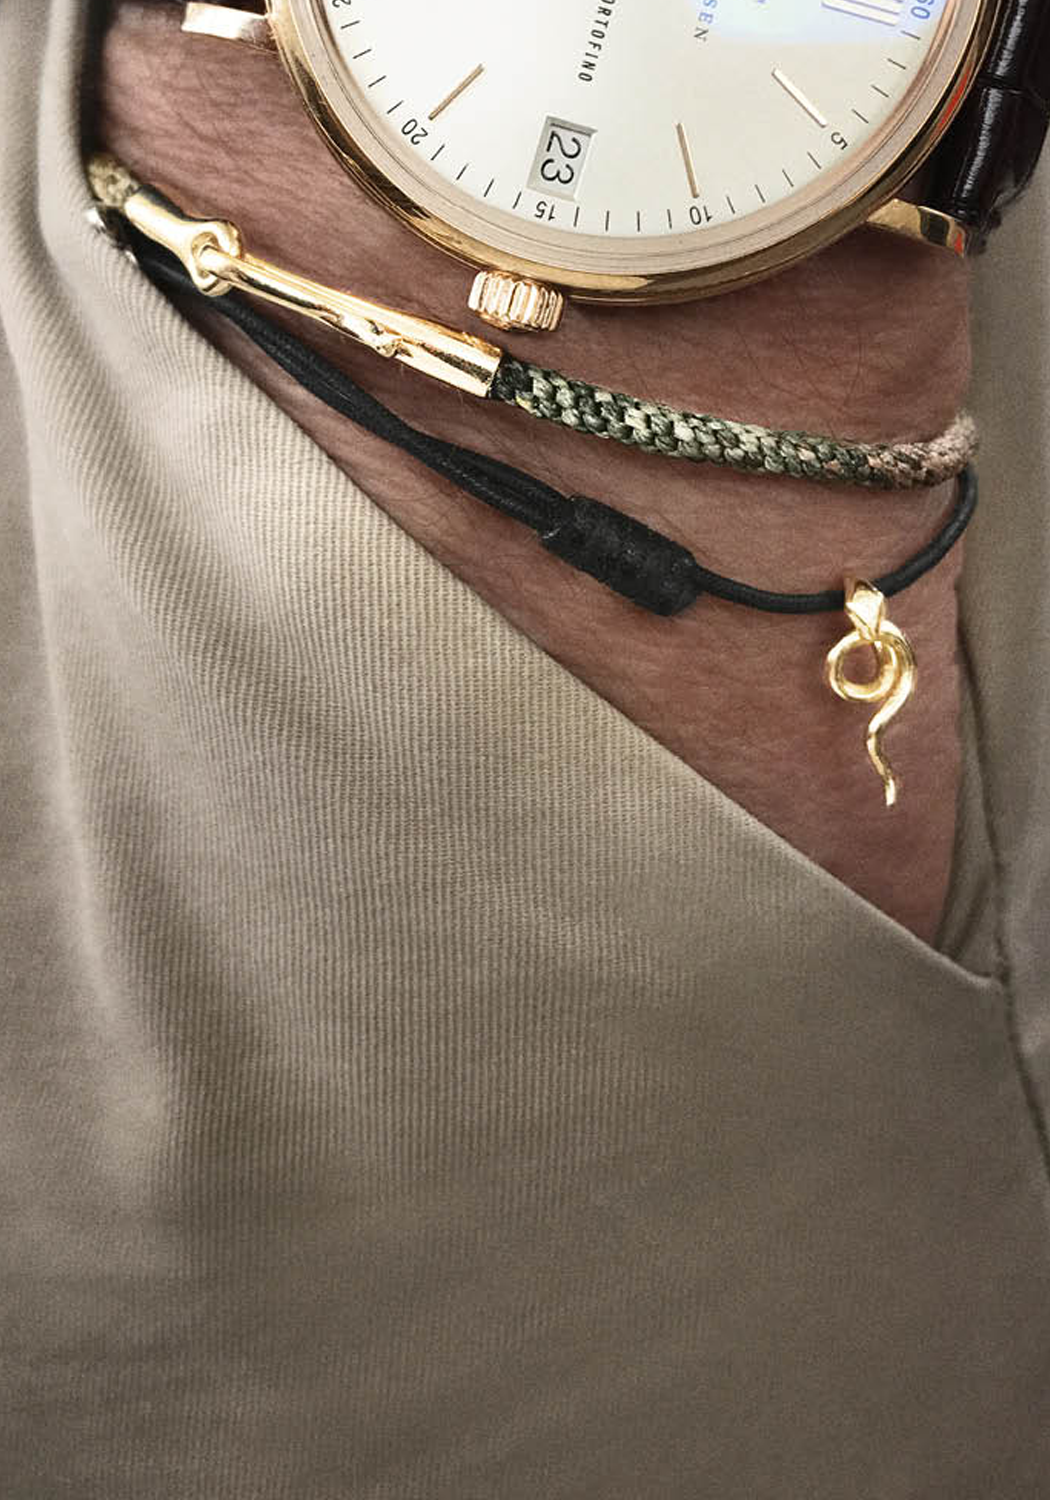 OLE LYNGGAARD My Little World 18KYG Snake Charm Bracelet | OsterJewelers.com